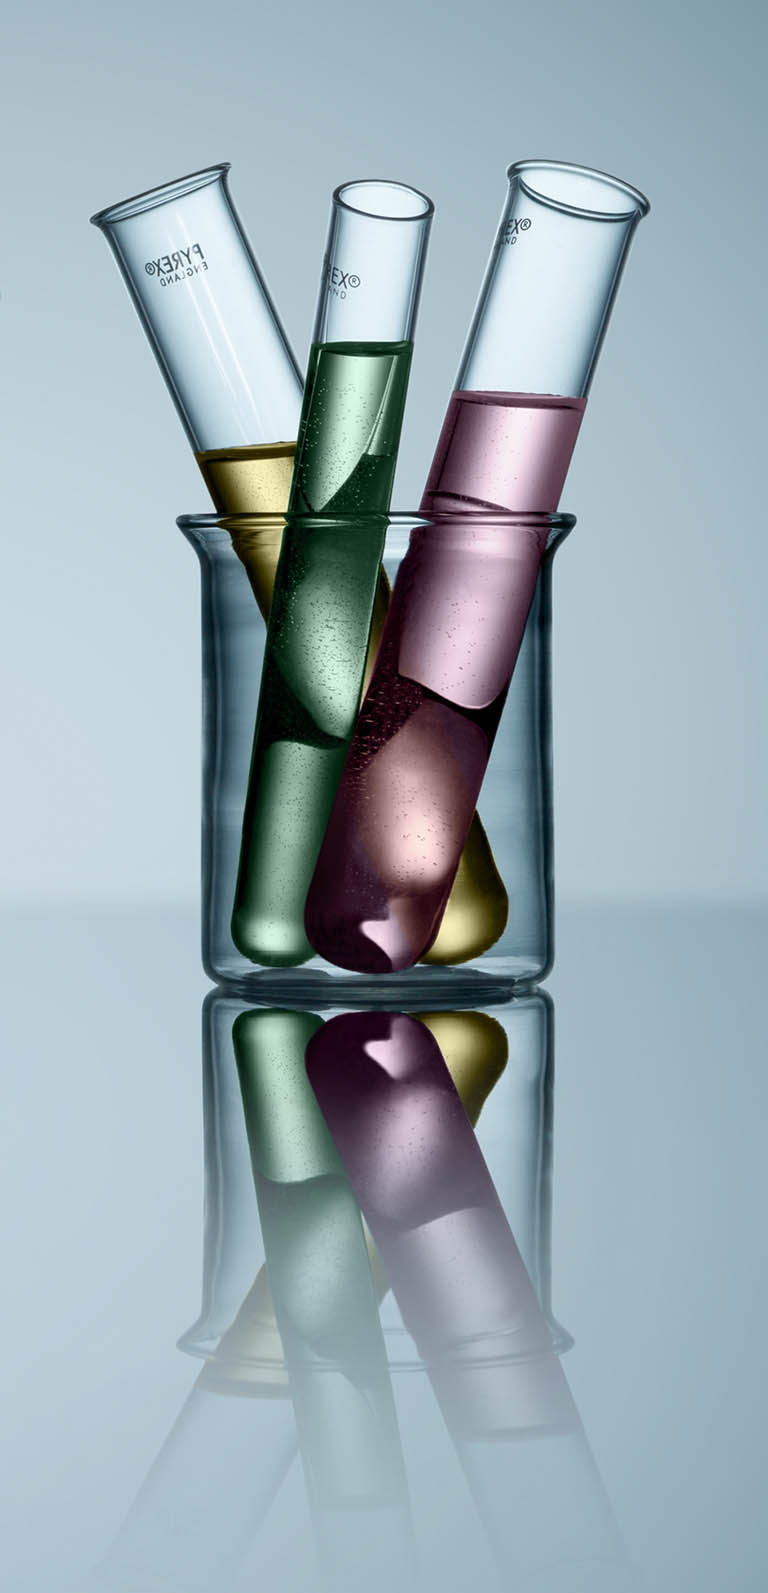 Packshot Factory - Coloured background - Glass jar and tubes